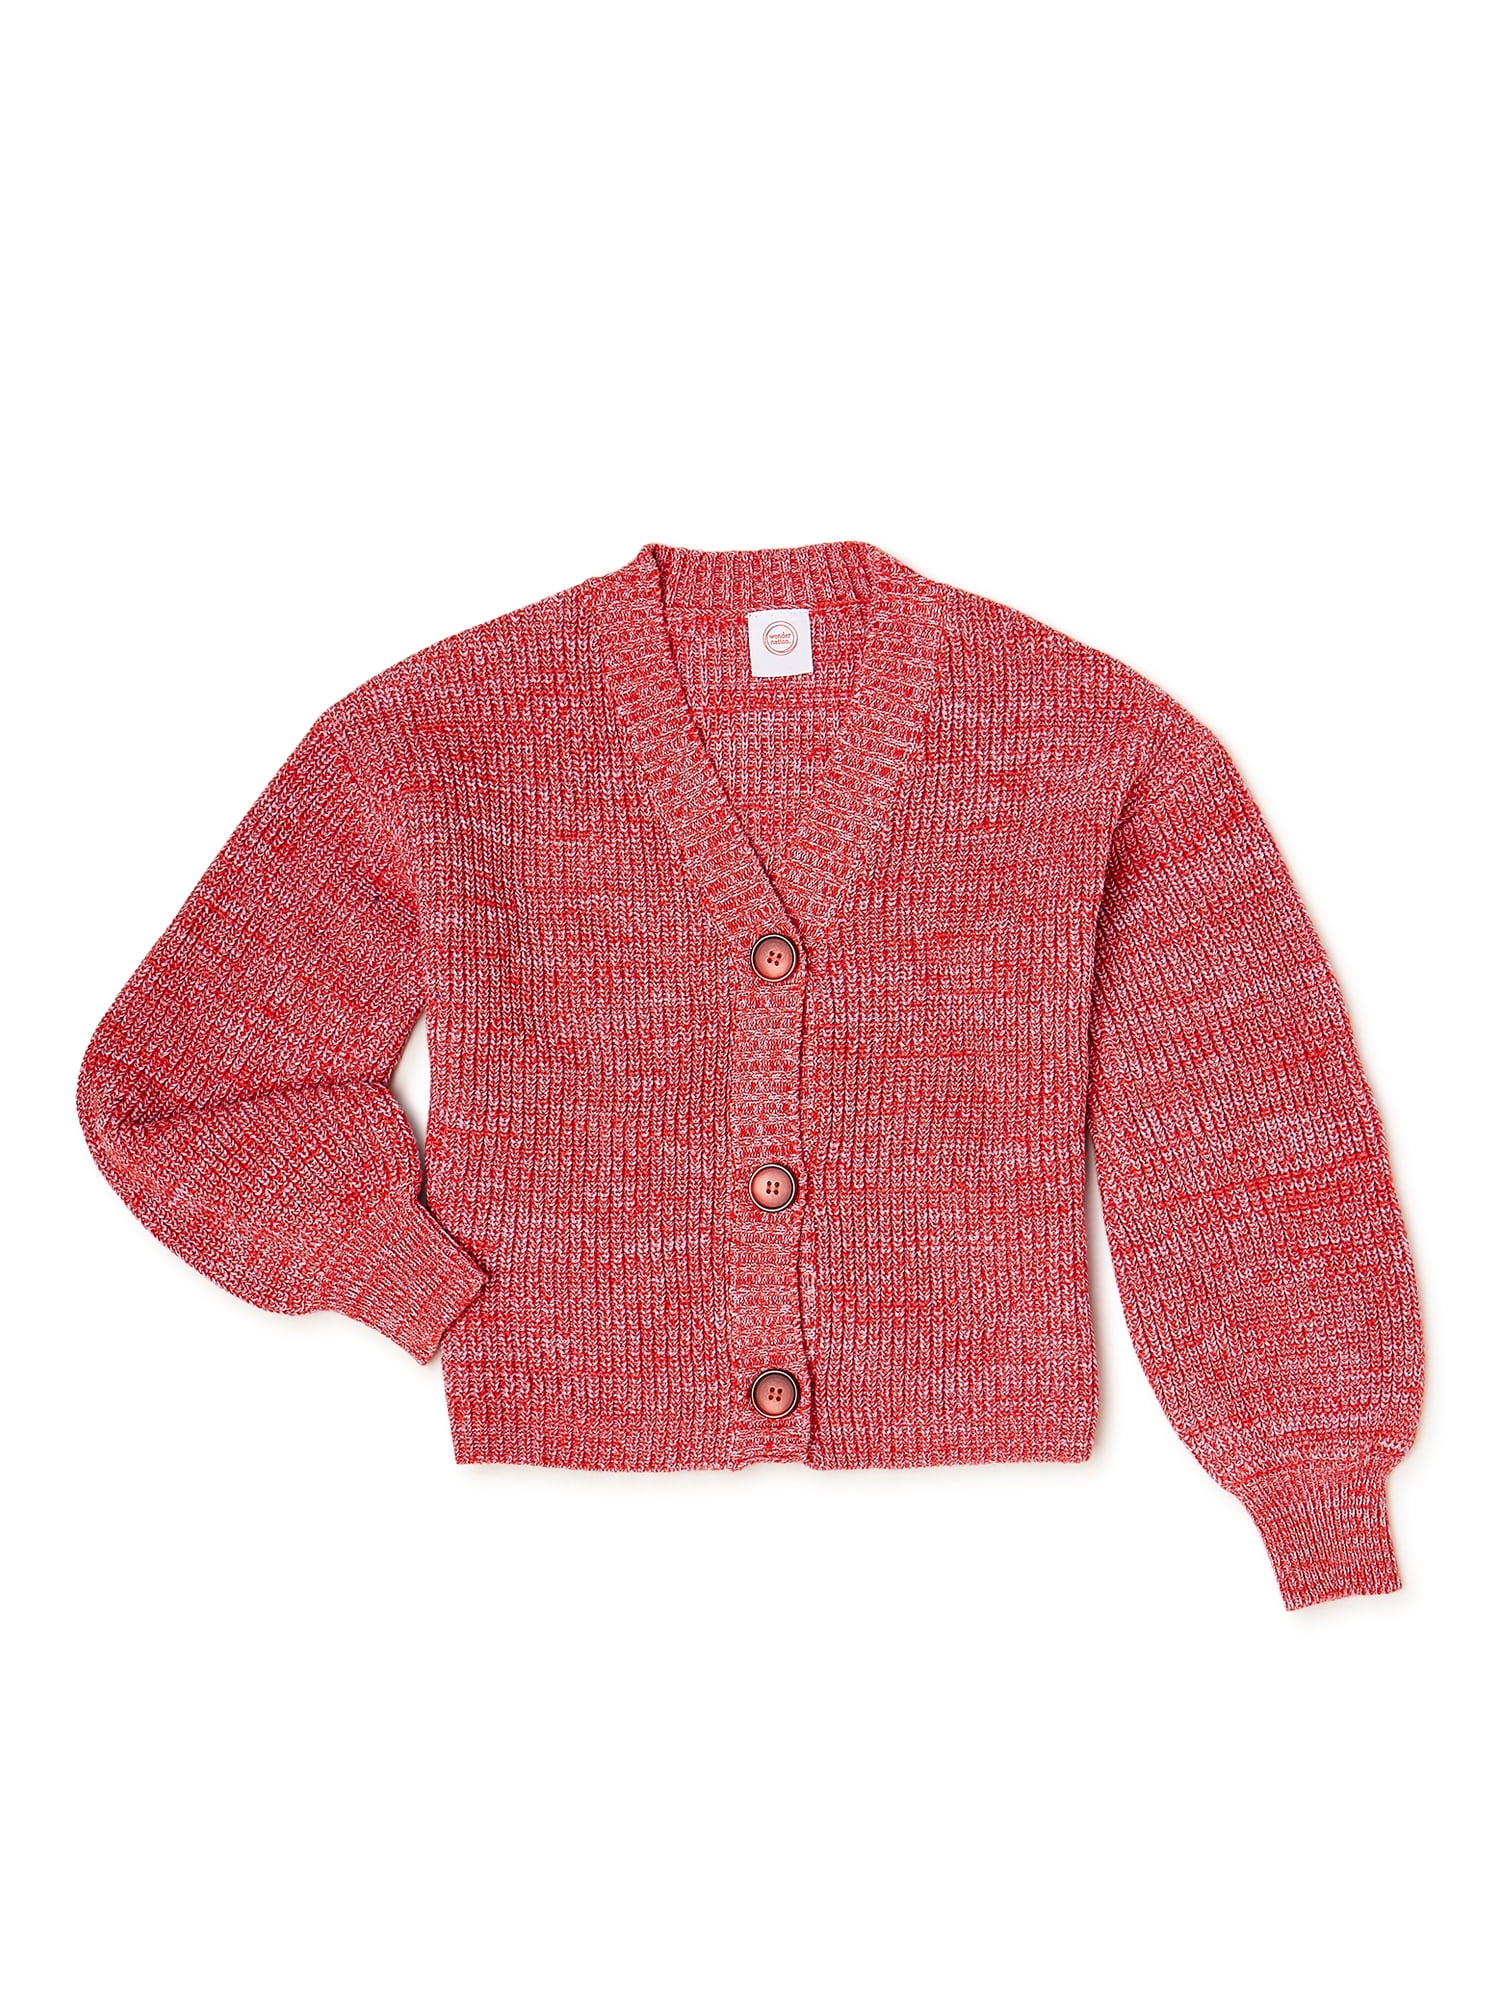 FULL TILT Button Front Girls Sweater